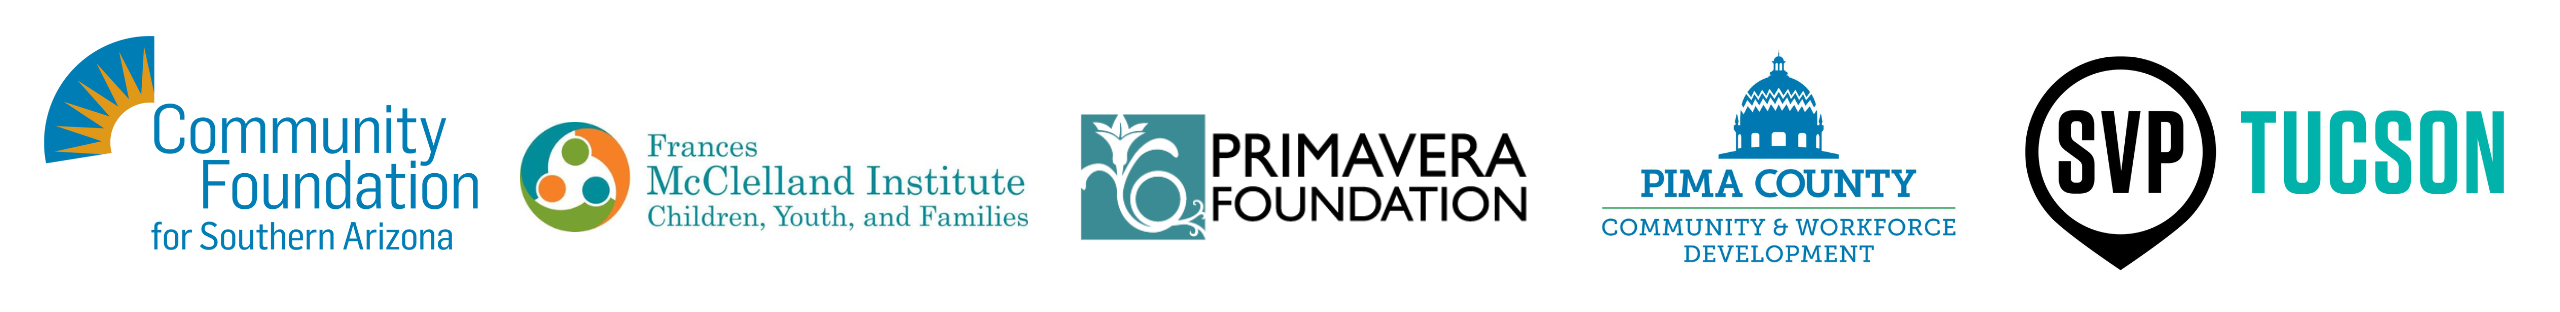 Partner ships Community Foundation for Southern Arizona, McClelland Institute, primavera foundation, pima county, svp, Tucson